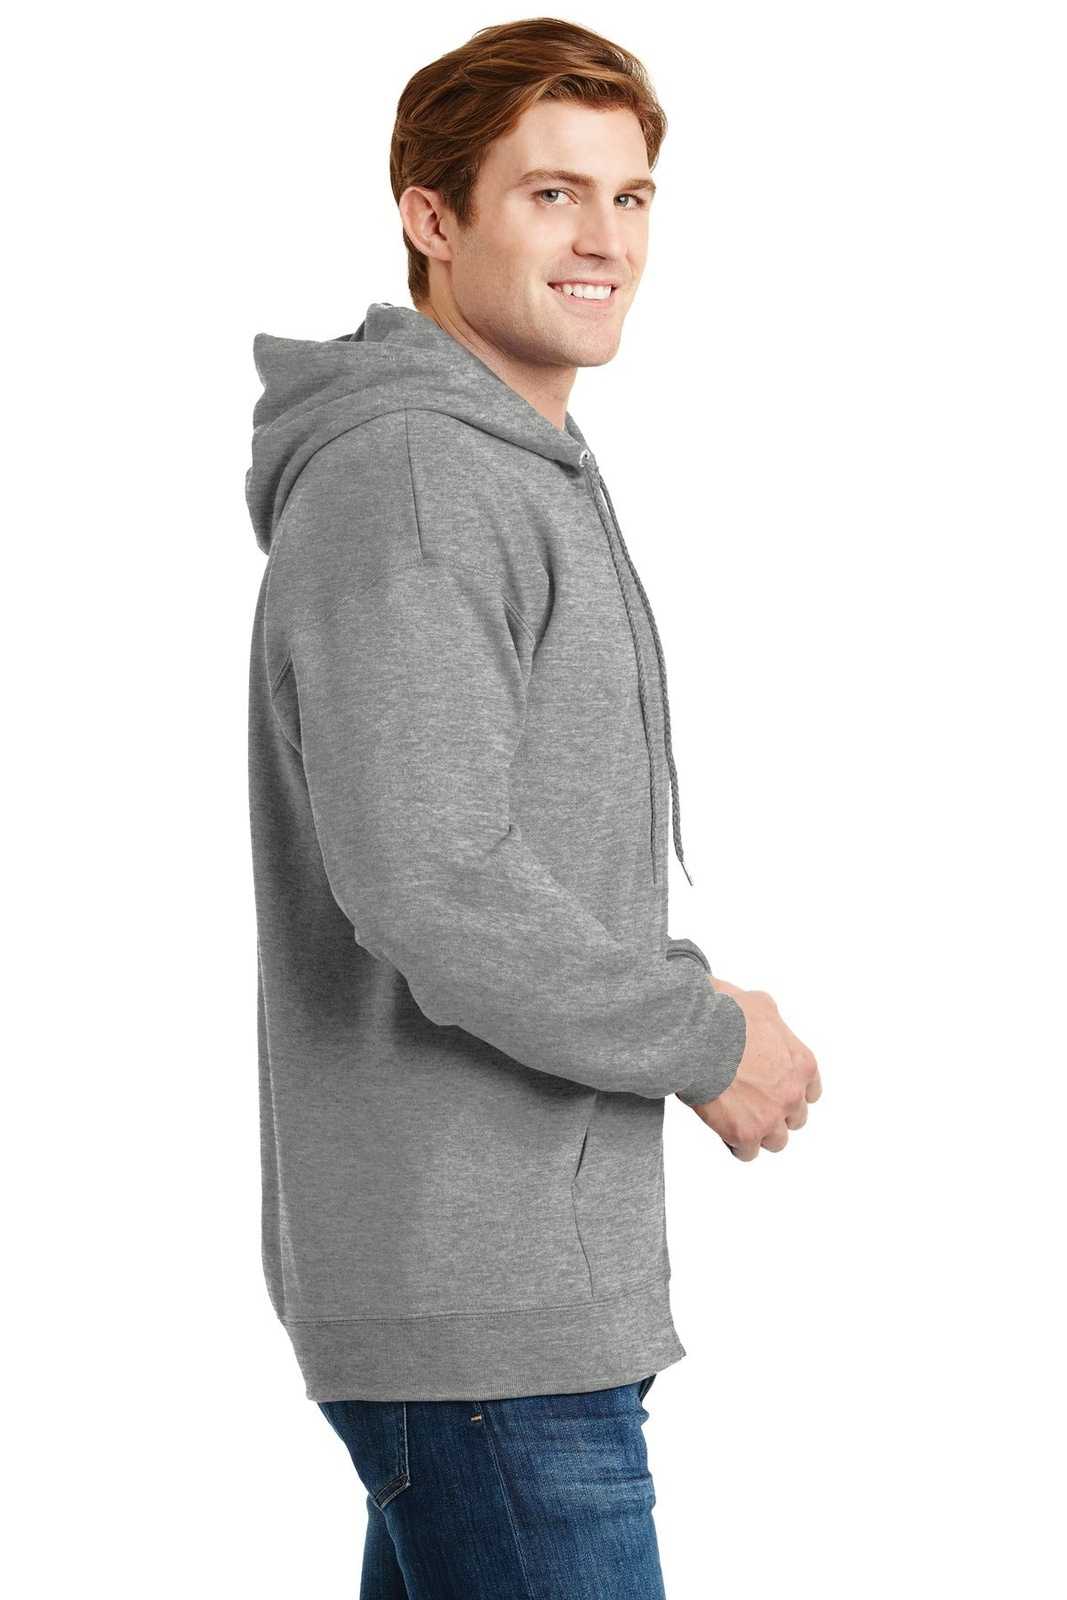 Hanes F283 Ultimate Cotton Full-Zip Hooded Sweatshirt - Light Steel - HIT a Double